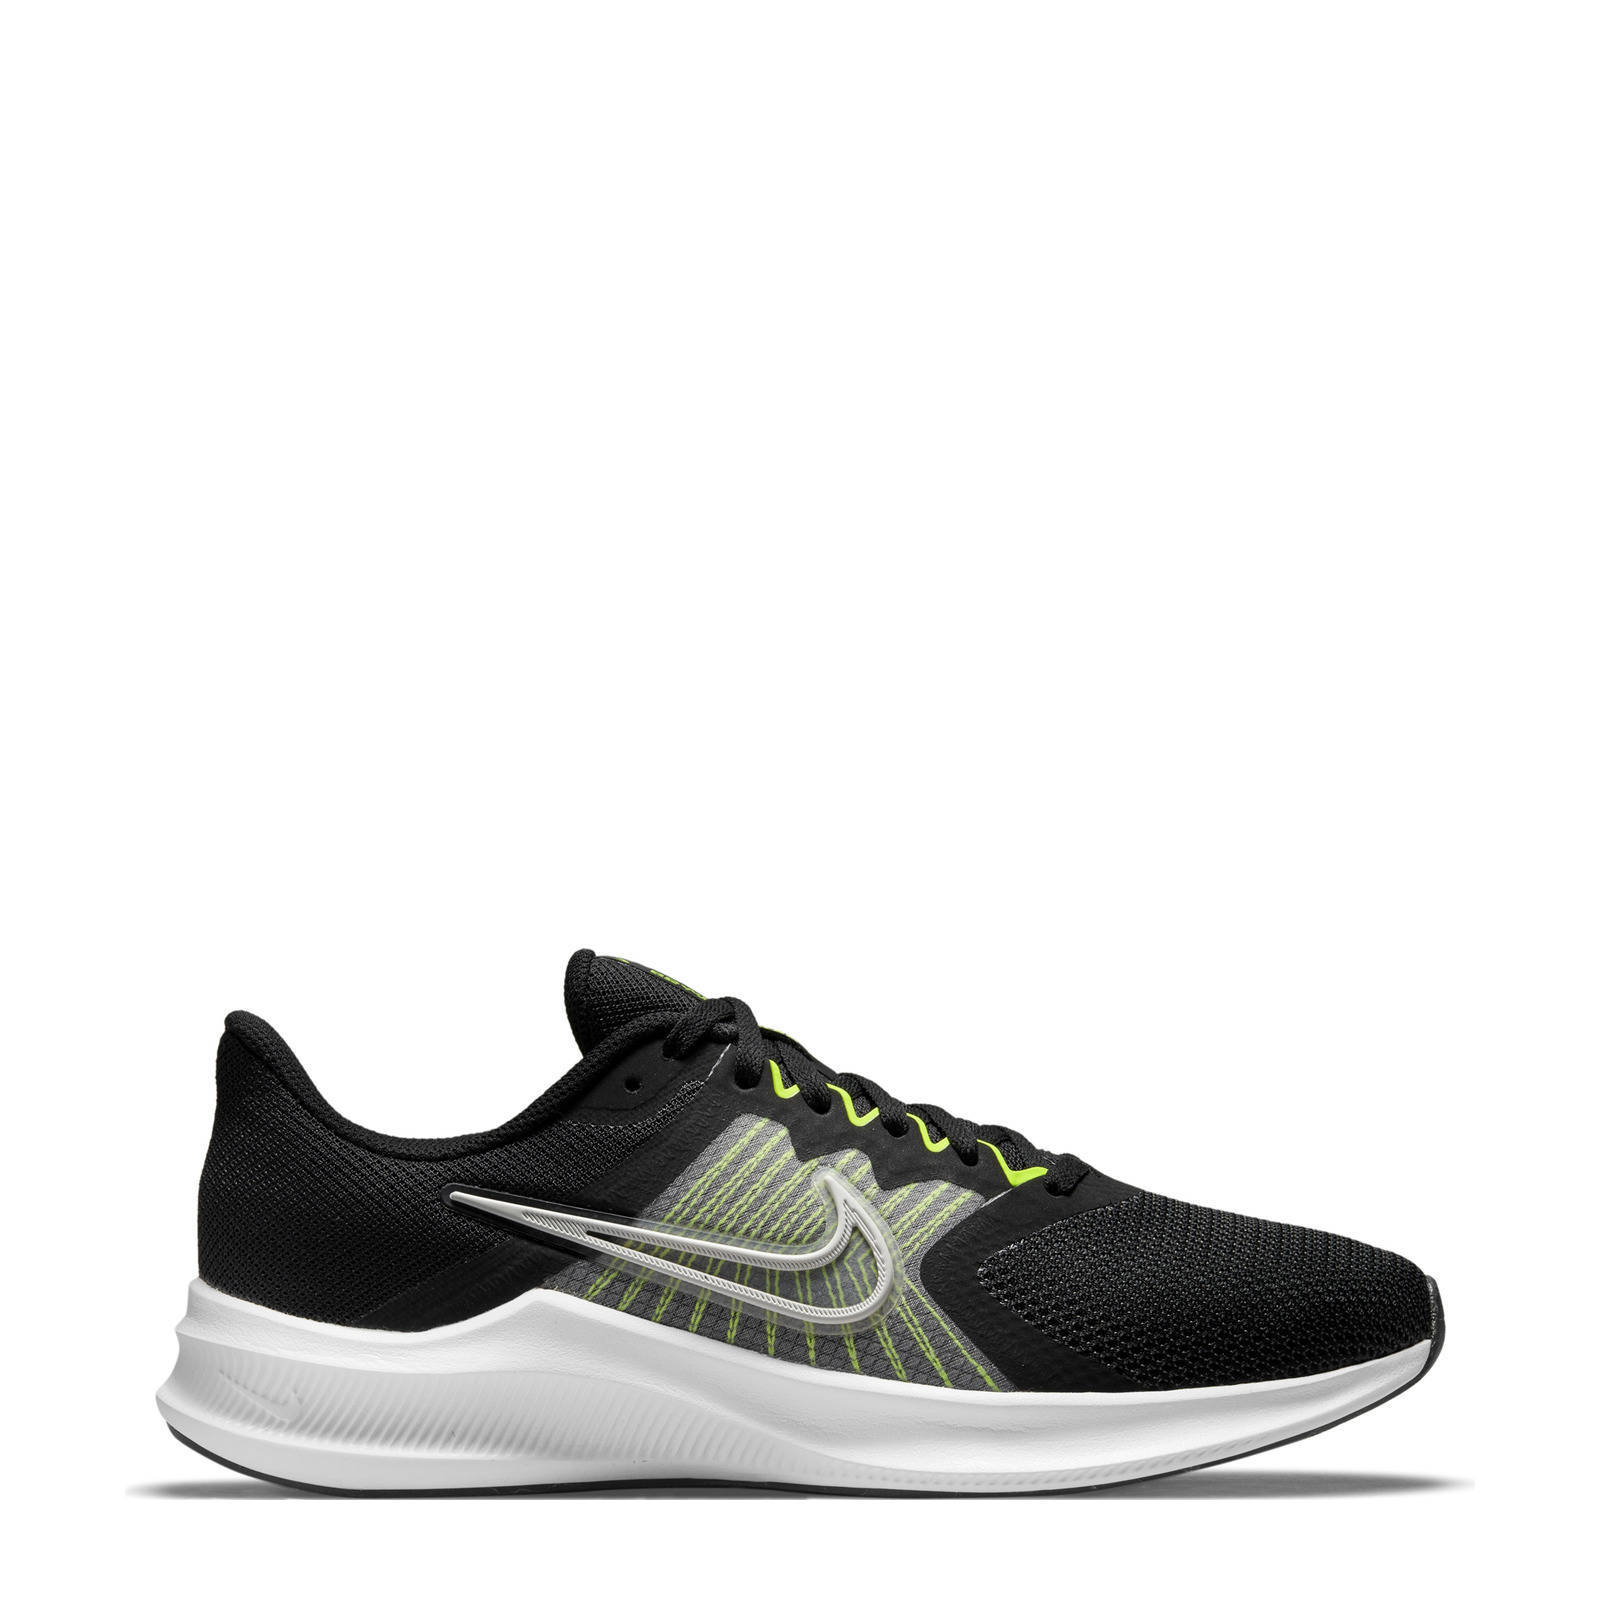 Nike Downshifter 11 hardloopschoenen zwart/grijs/wit online kopen